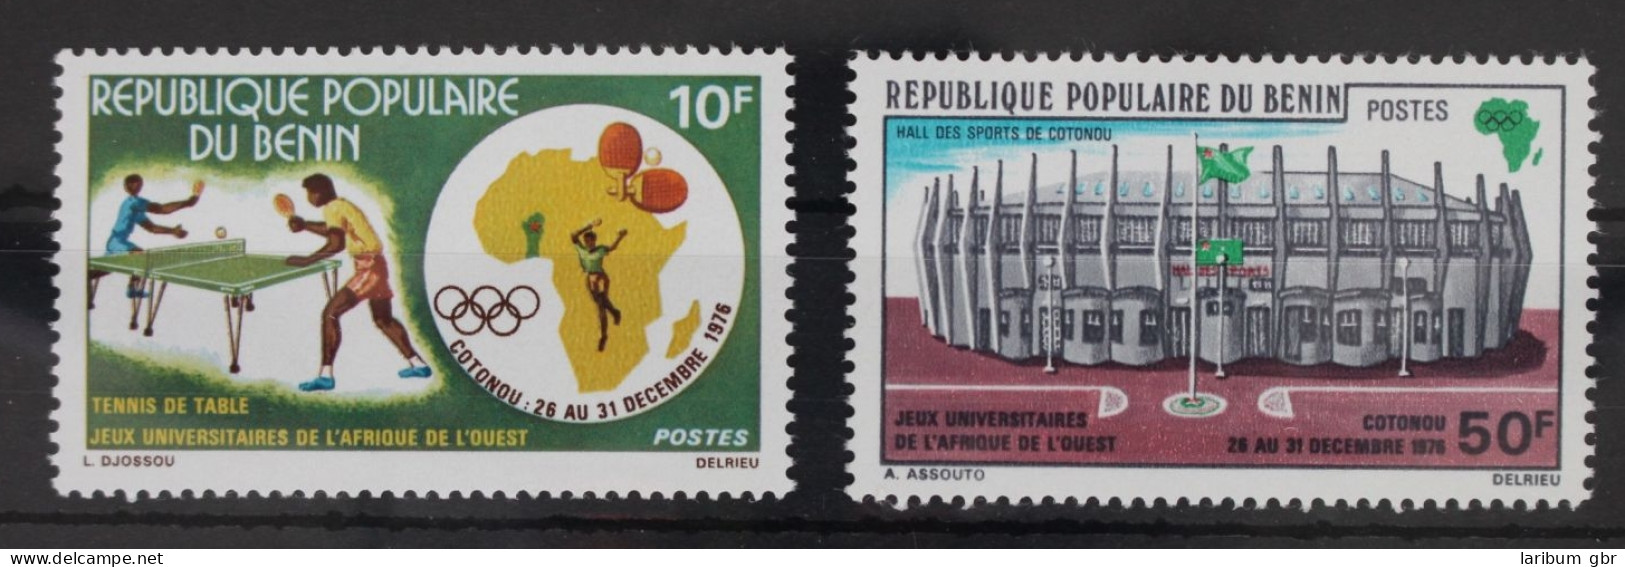 Benin 84-85 Postfrisch Sport #WW406 - Benin - Dahomey (1960-...)